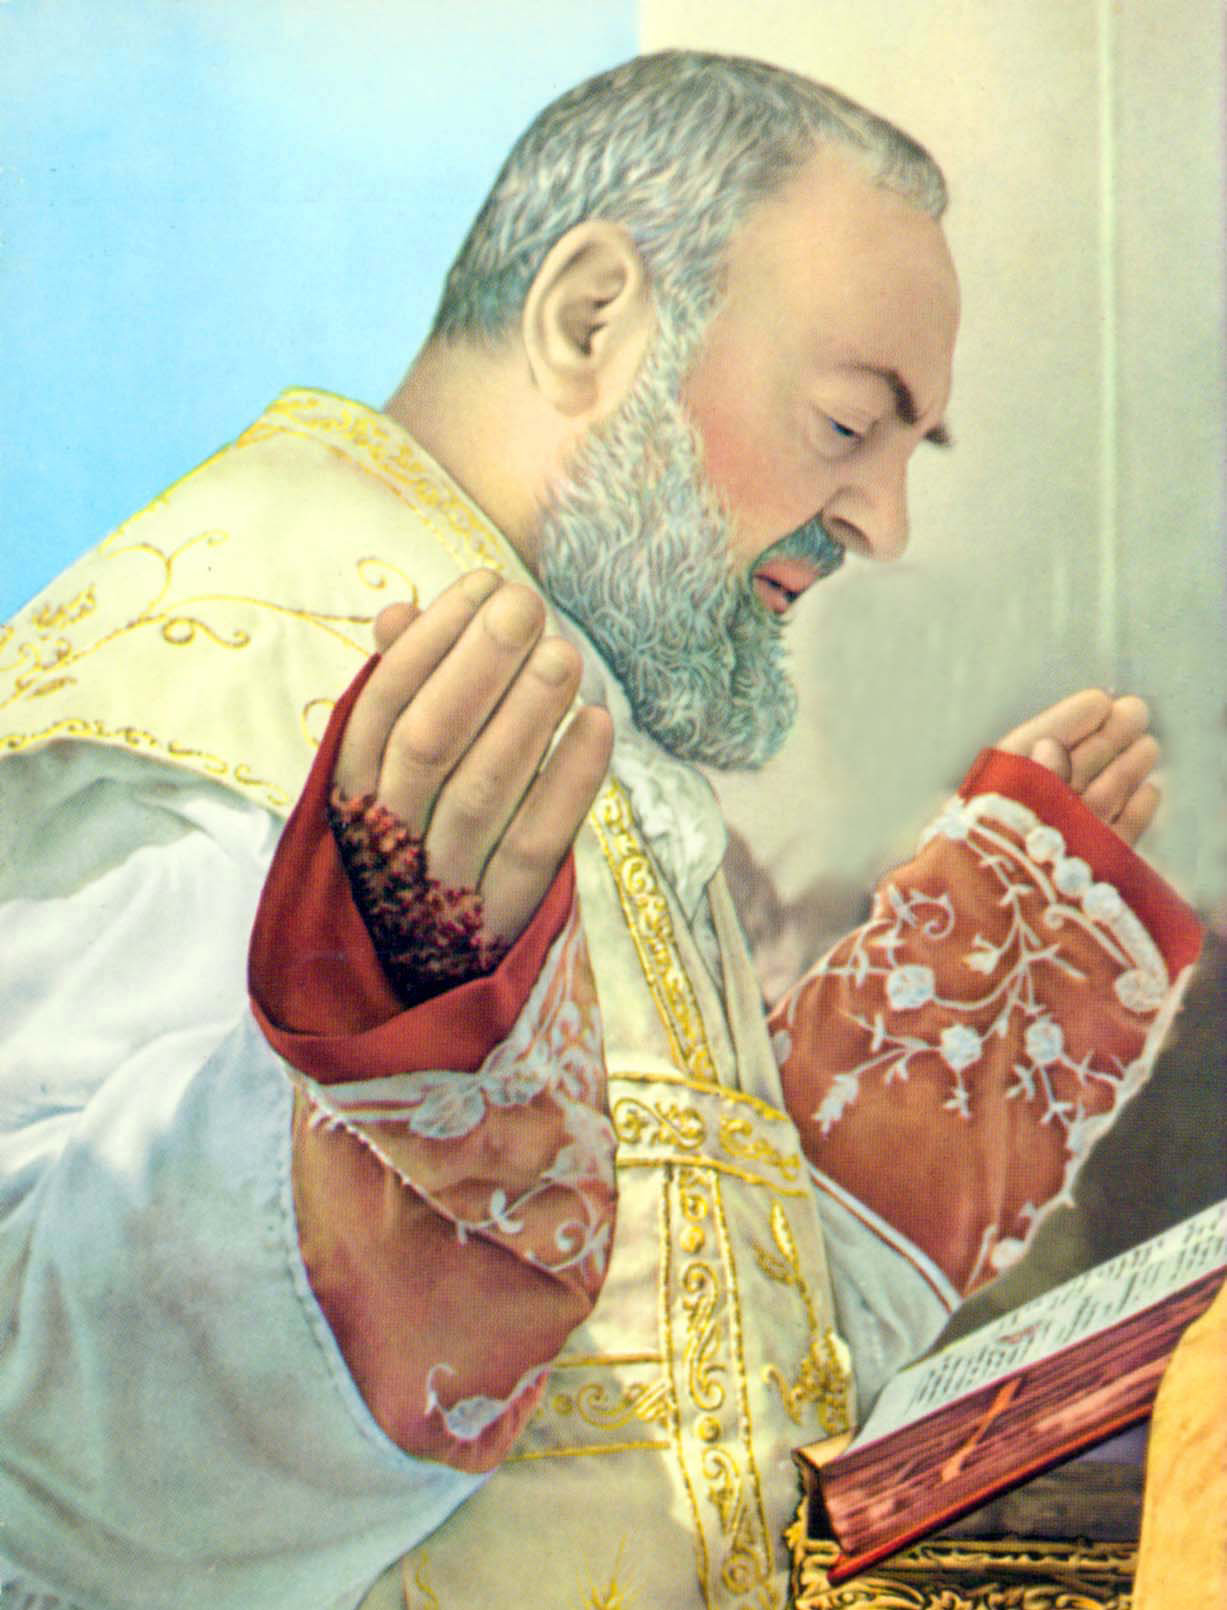  <a href="https://www.bisericapalmariana.org/saint-pio-of-pietrelcina/" title="Sfîntul Pio din Pietrelcina">Sfîntul Pio din Pietrelcina<br><br>Vedeți mai departe</a>